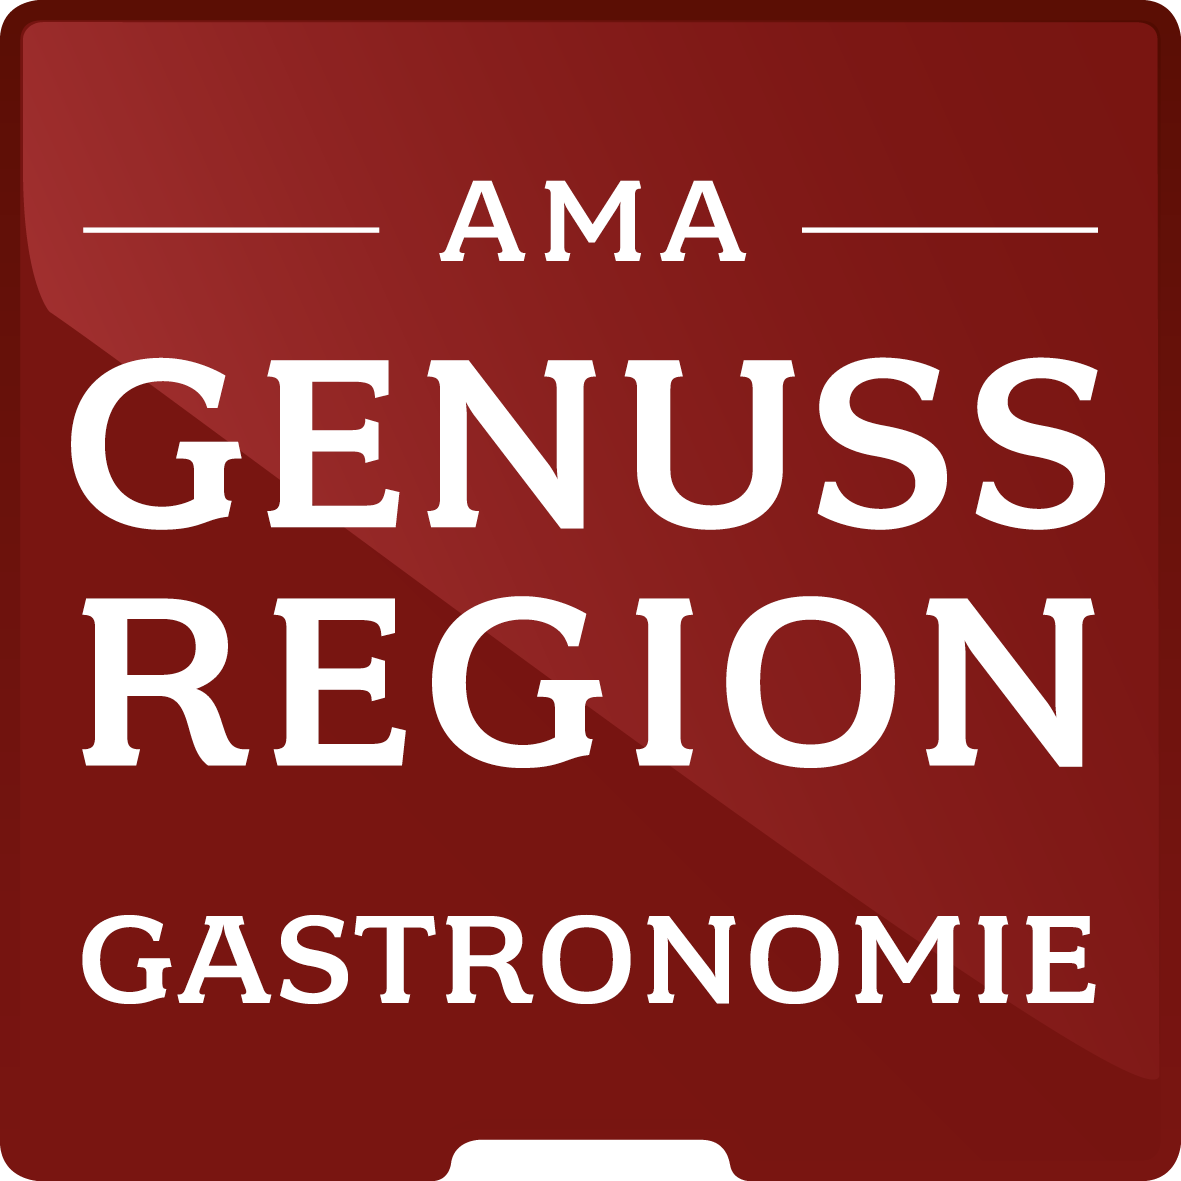 AMA_Genuss-Region_Gastronomie